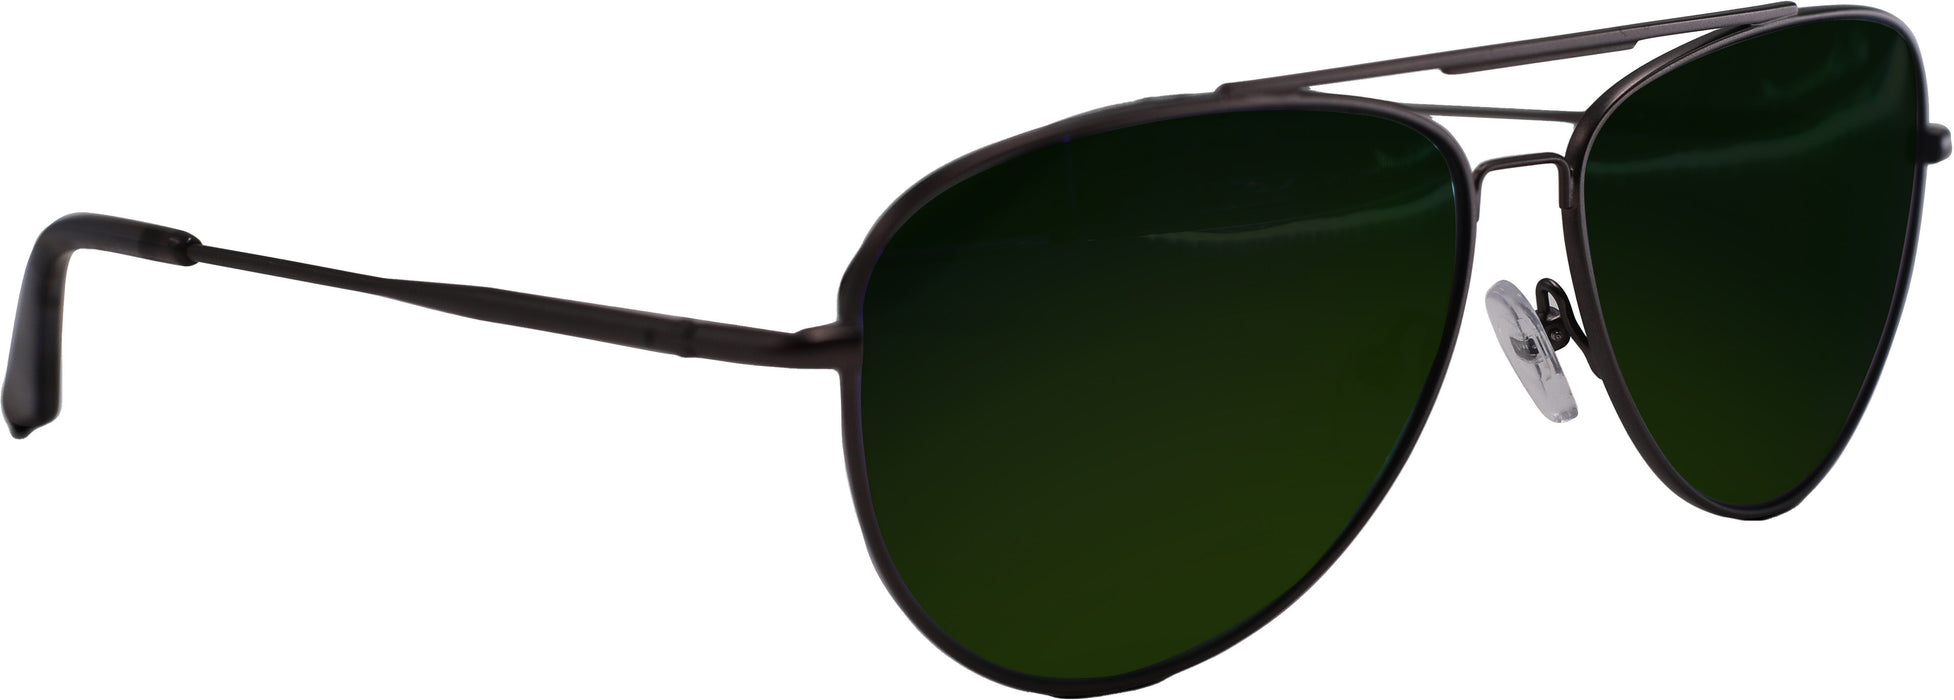 RLVNT Superior Series Sunglasses